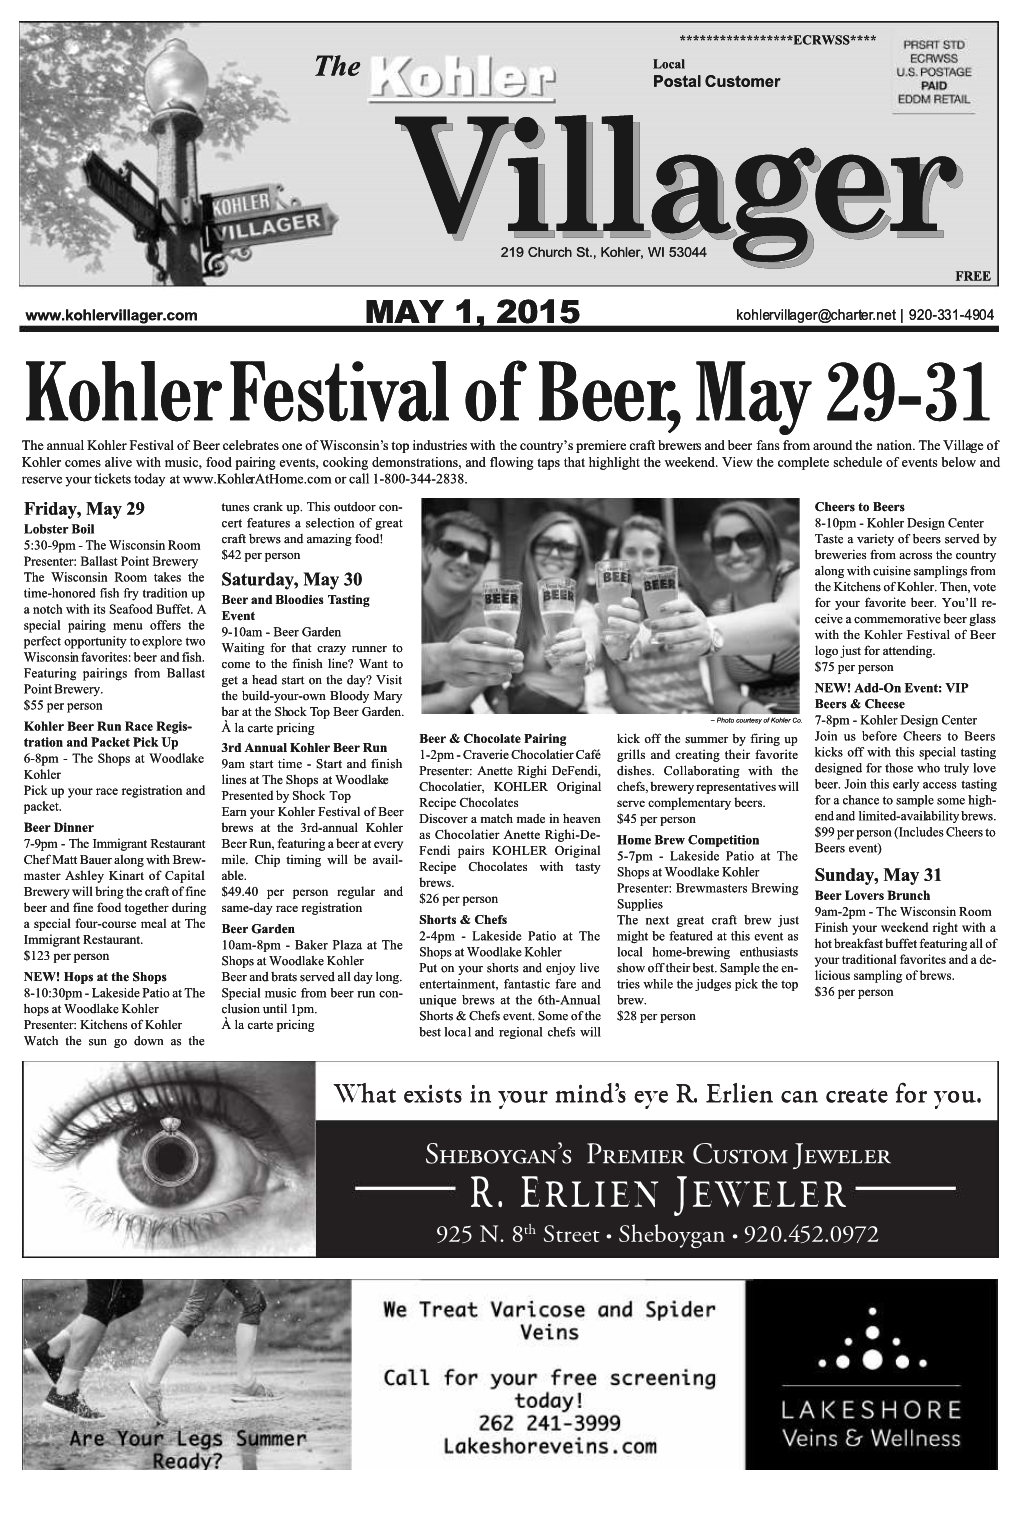 Kohlerfestivalof Beer,May 29-31